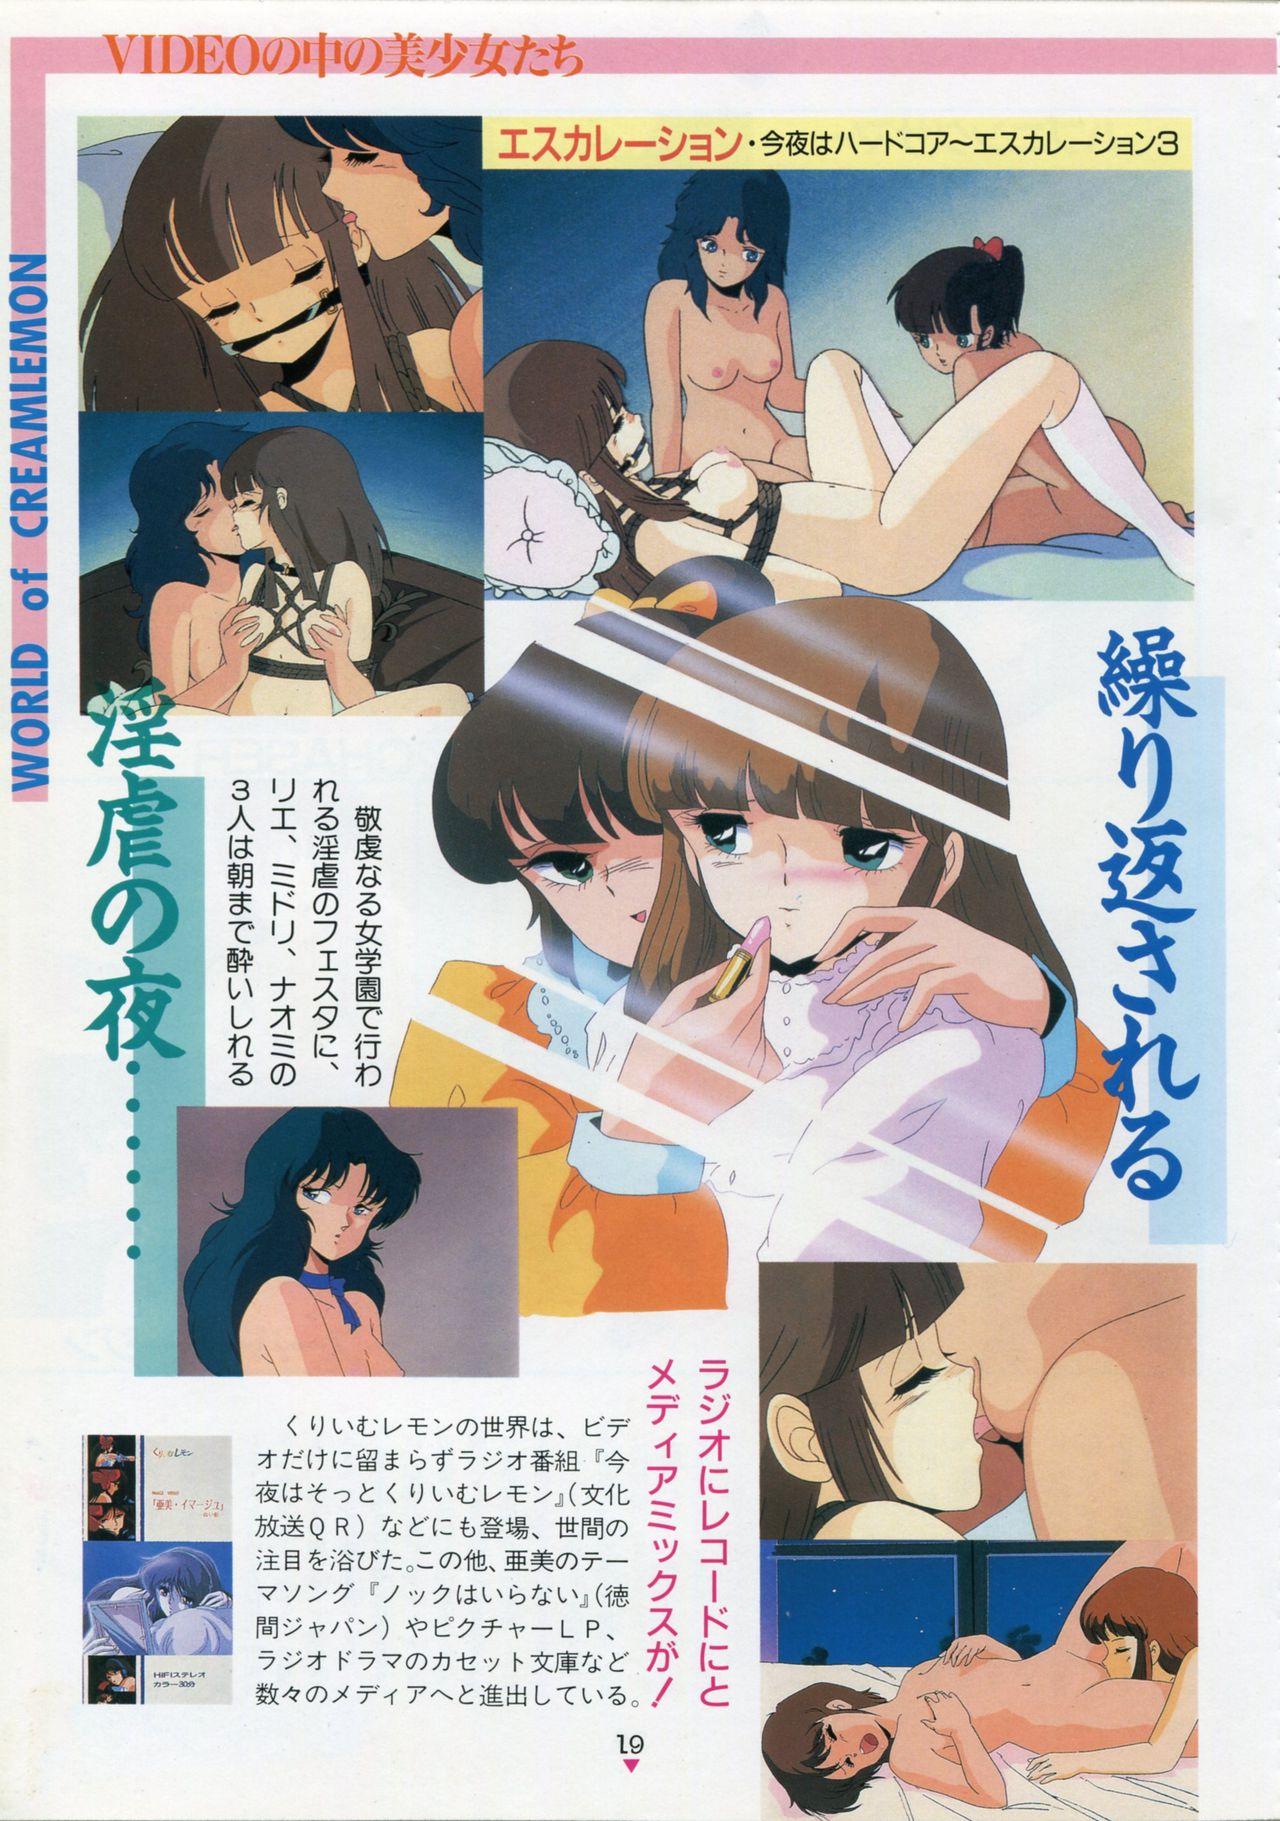 Bishoujo Anime Daizenshuu - Adult Animation Video Catalog 1991 14